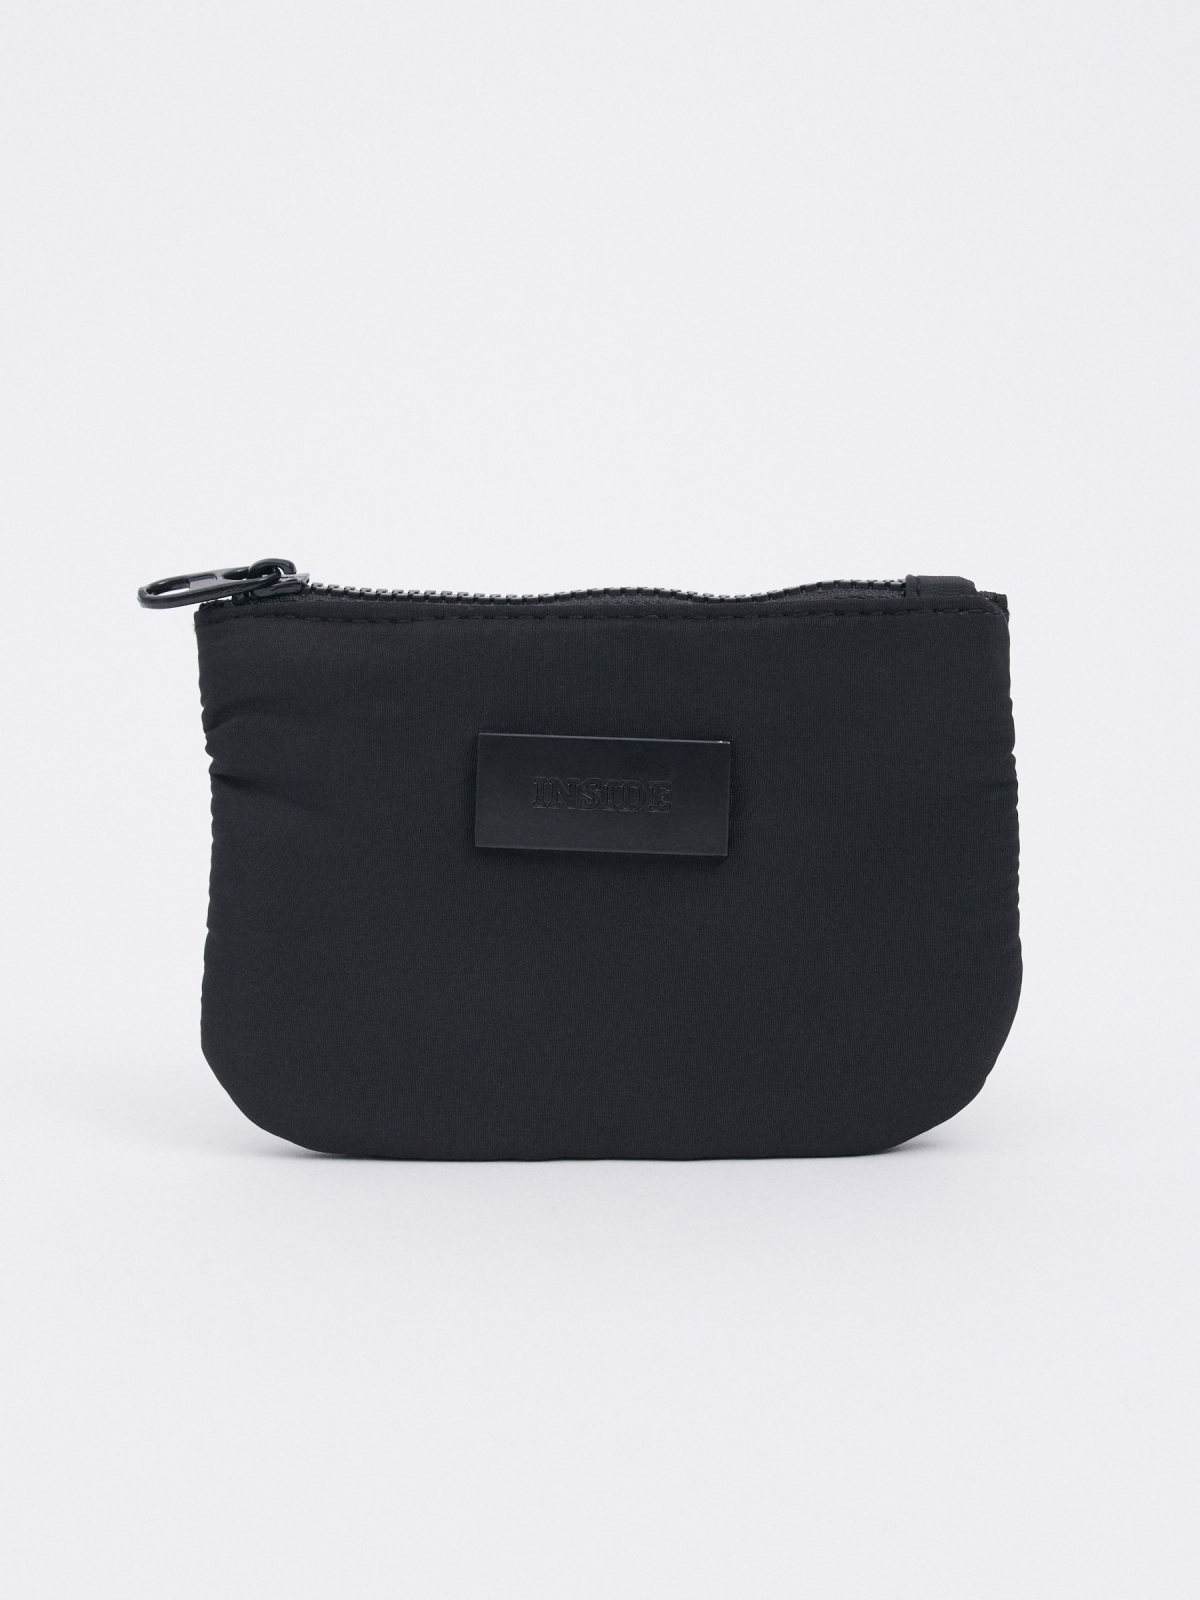 Black nylon purse black